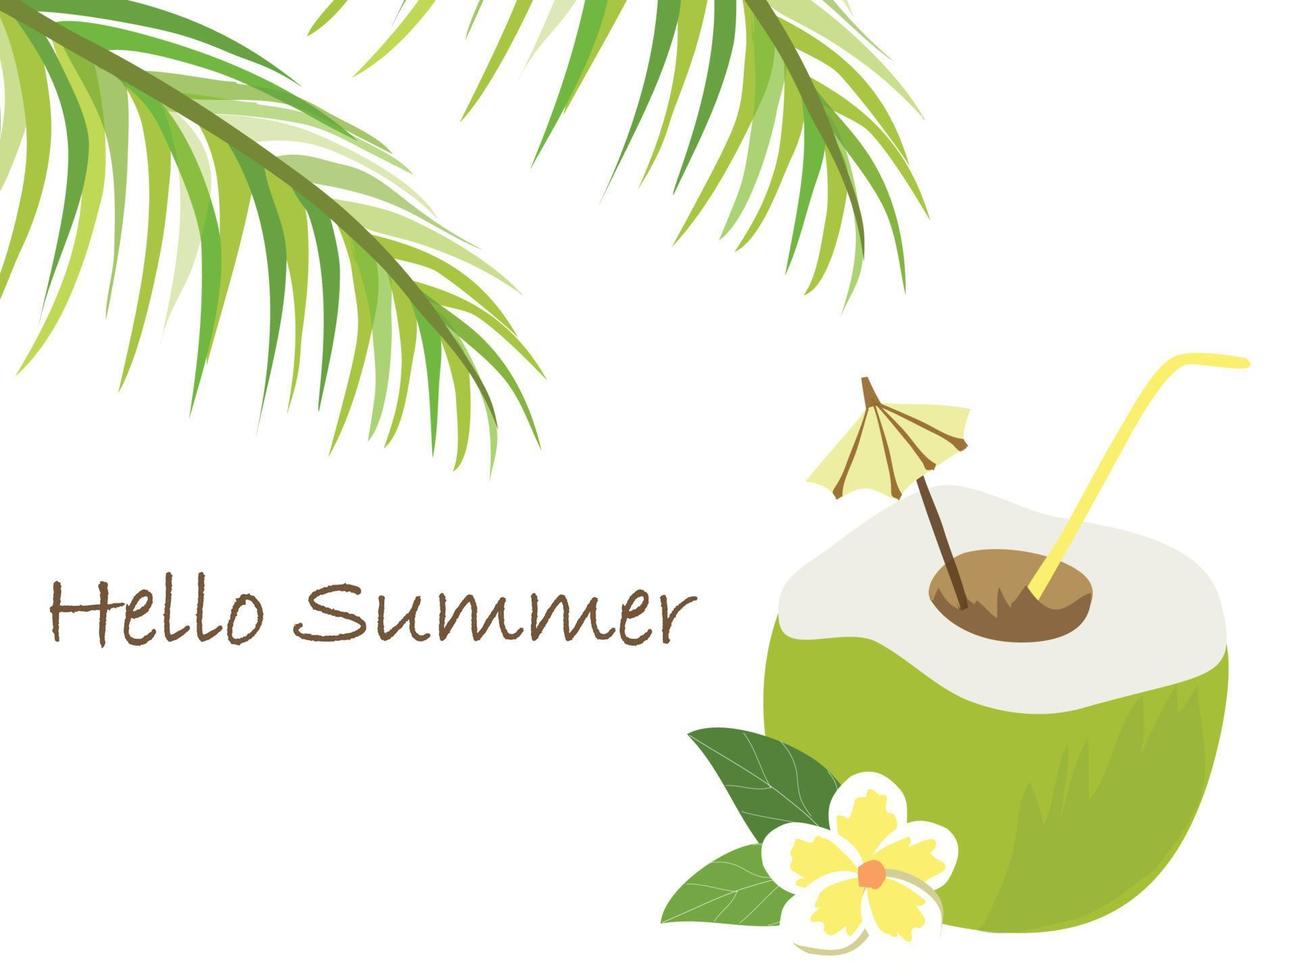 Coconut fruit on beach vector illustration. Hello summer holidays concept